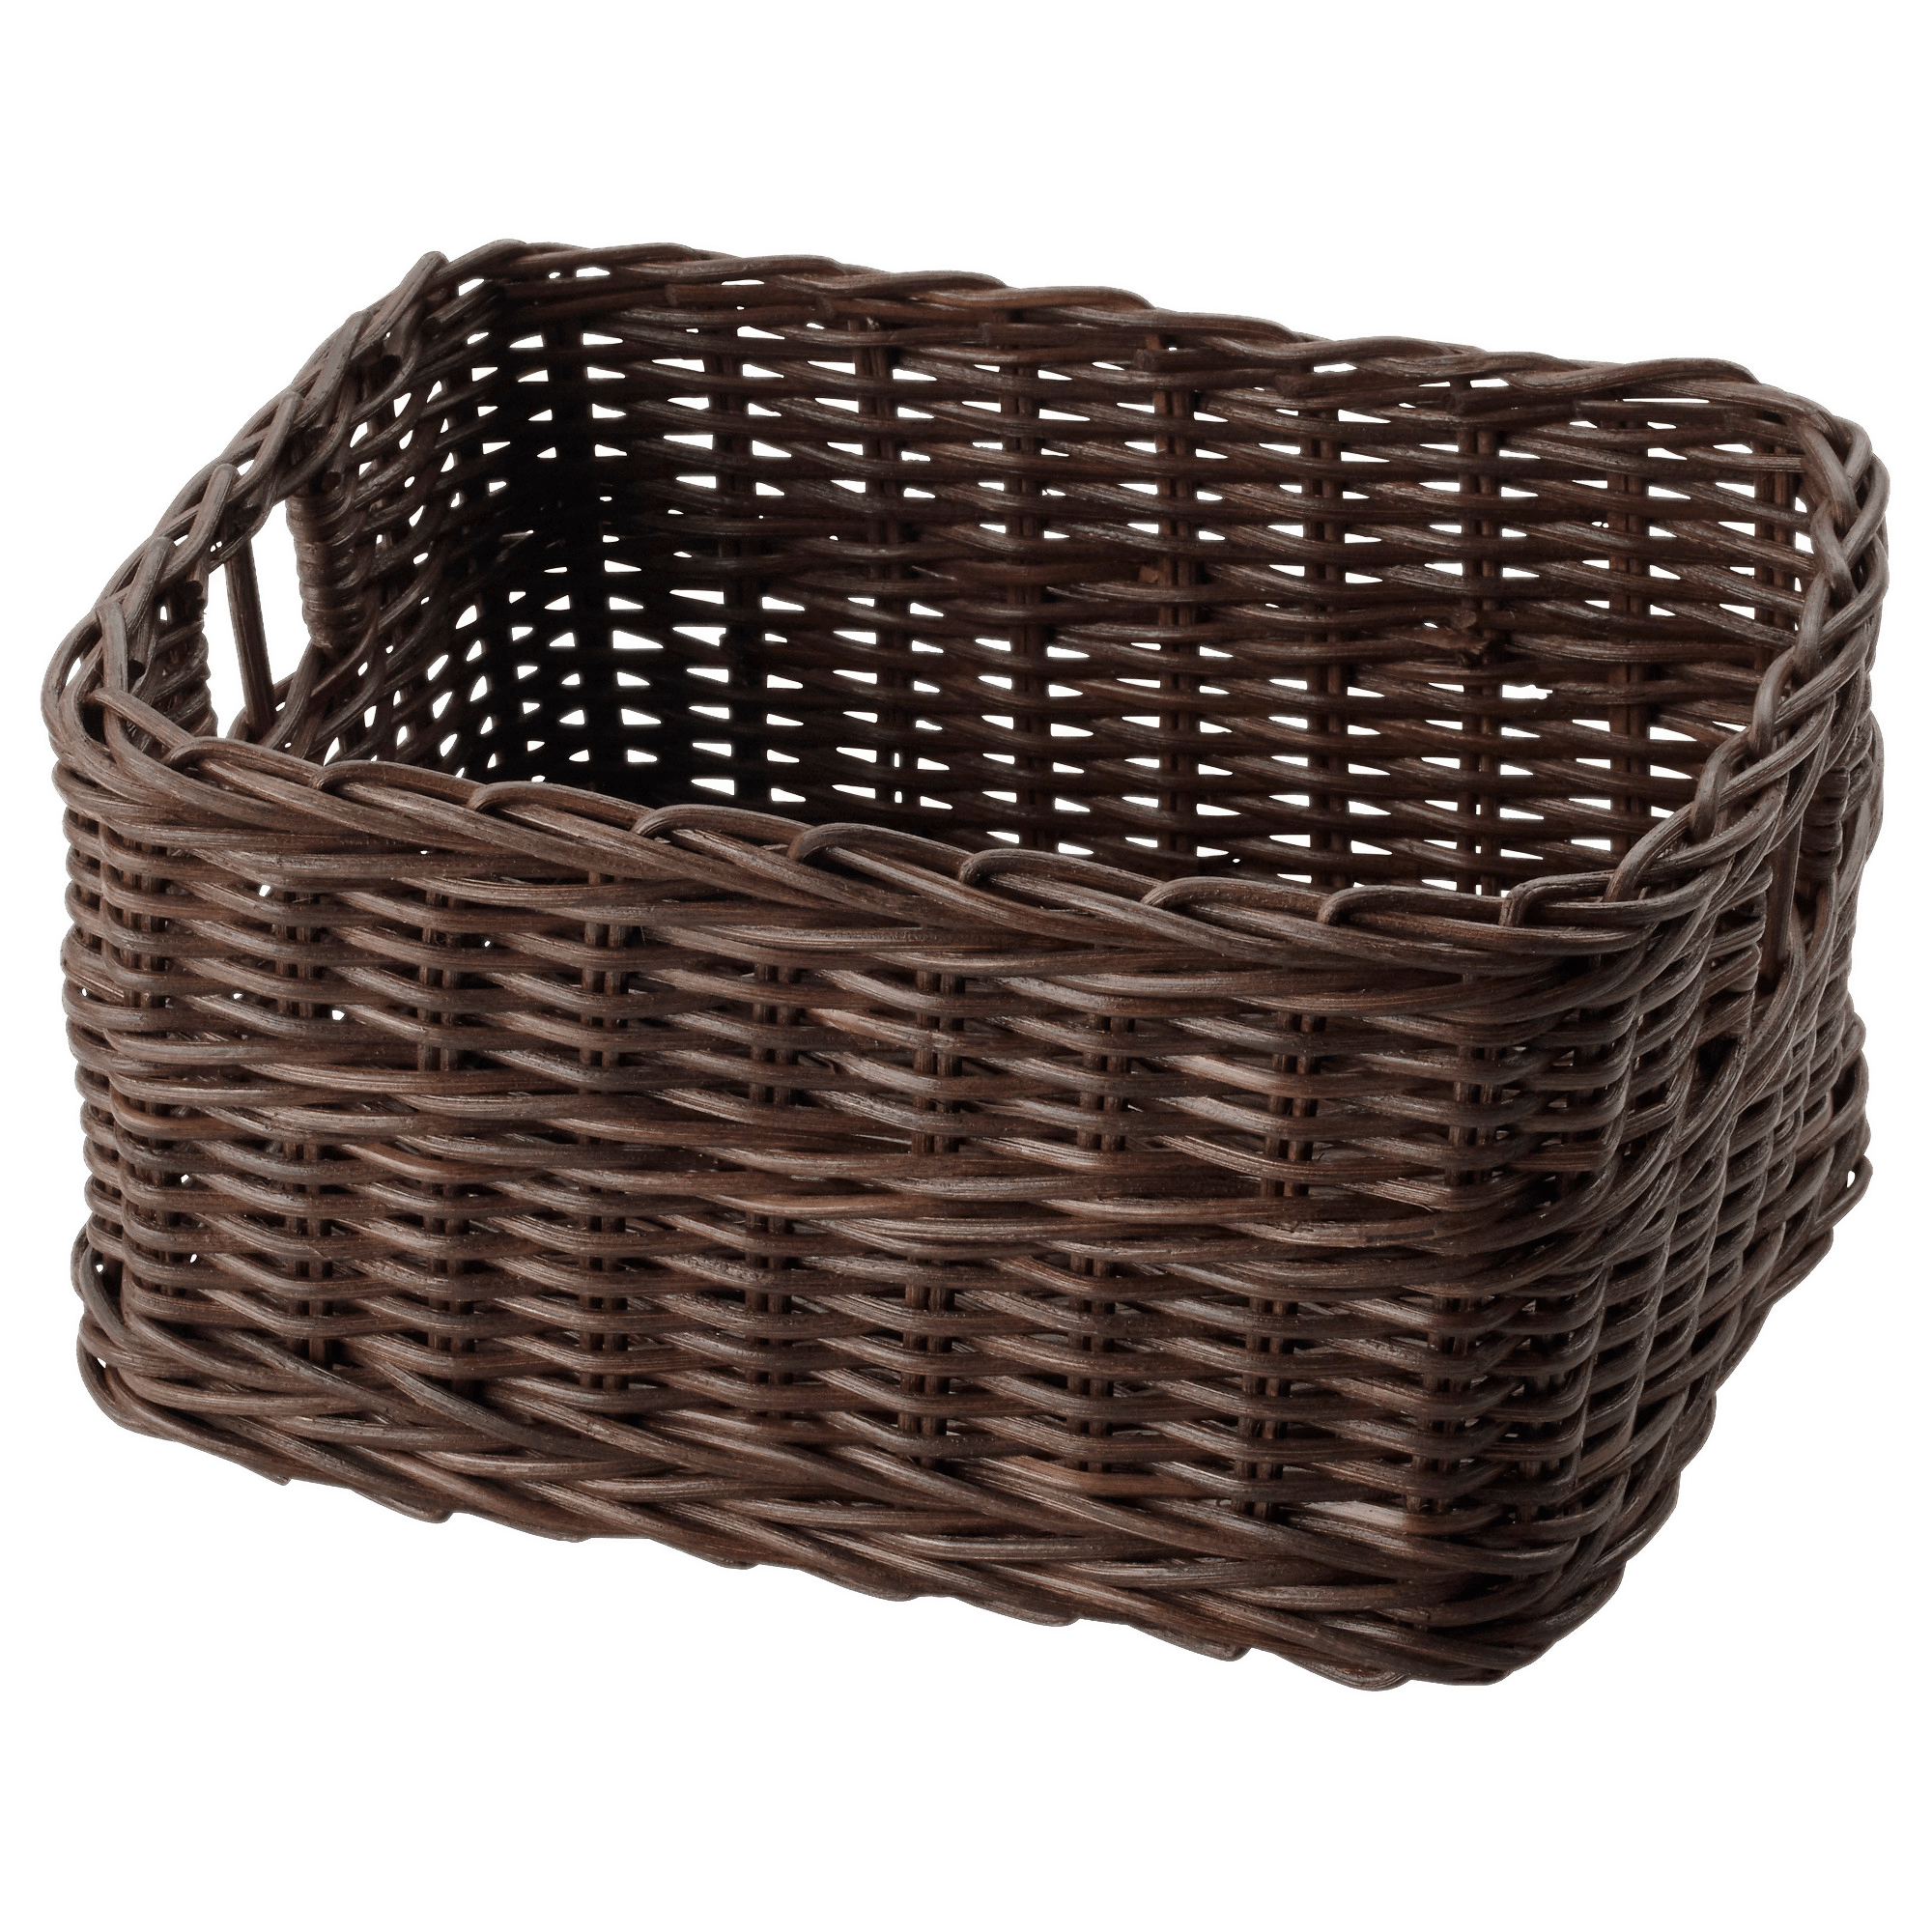 Empty Basket